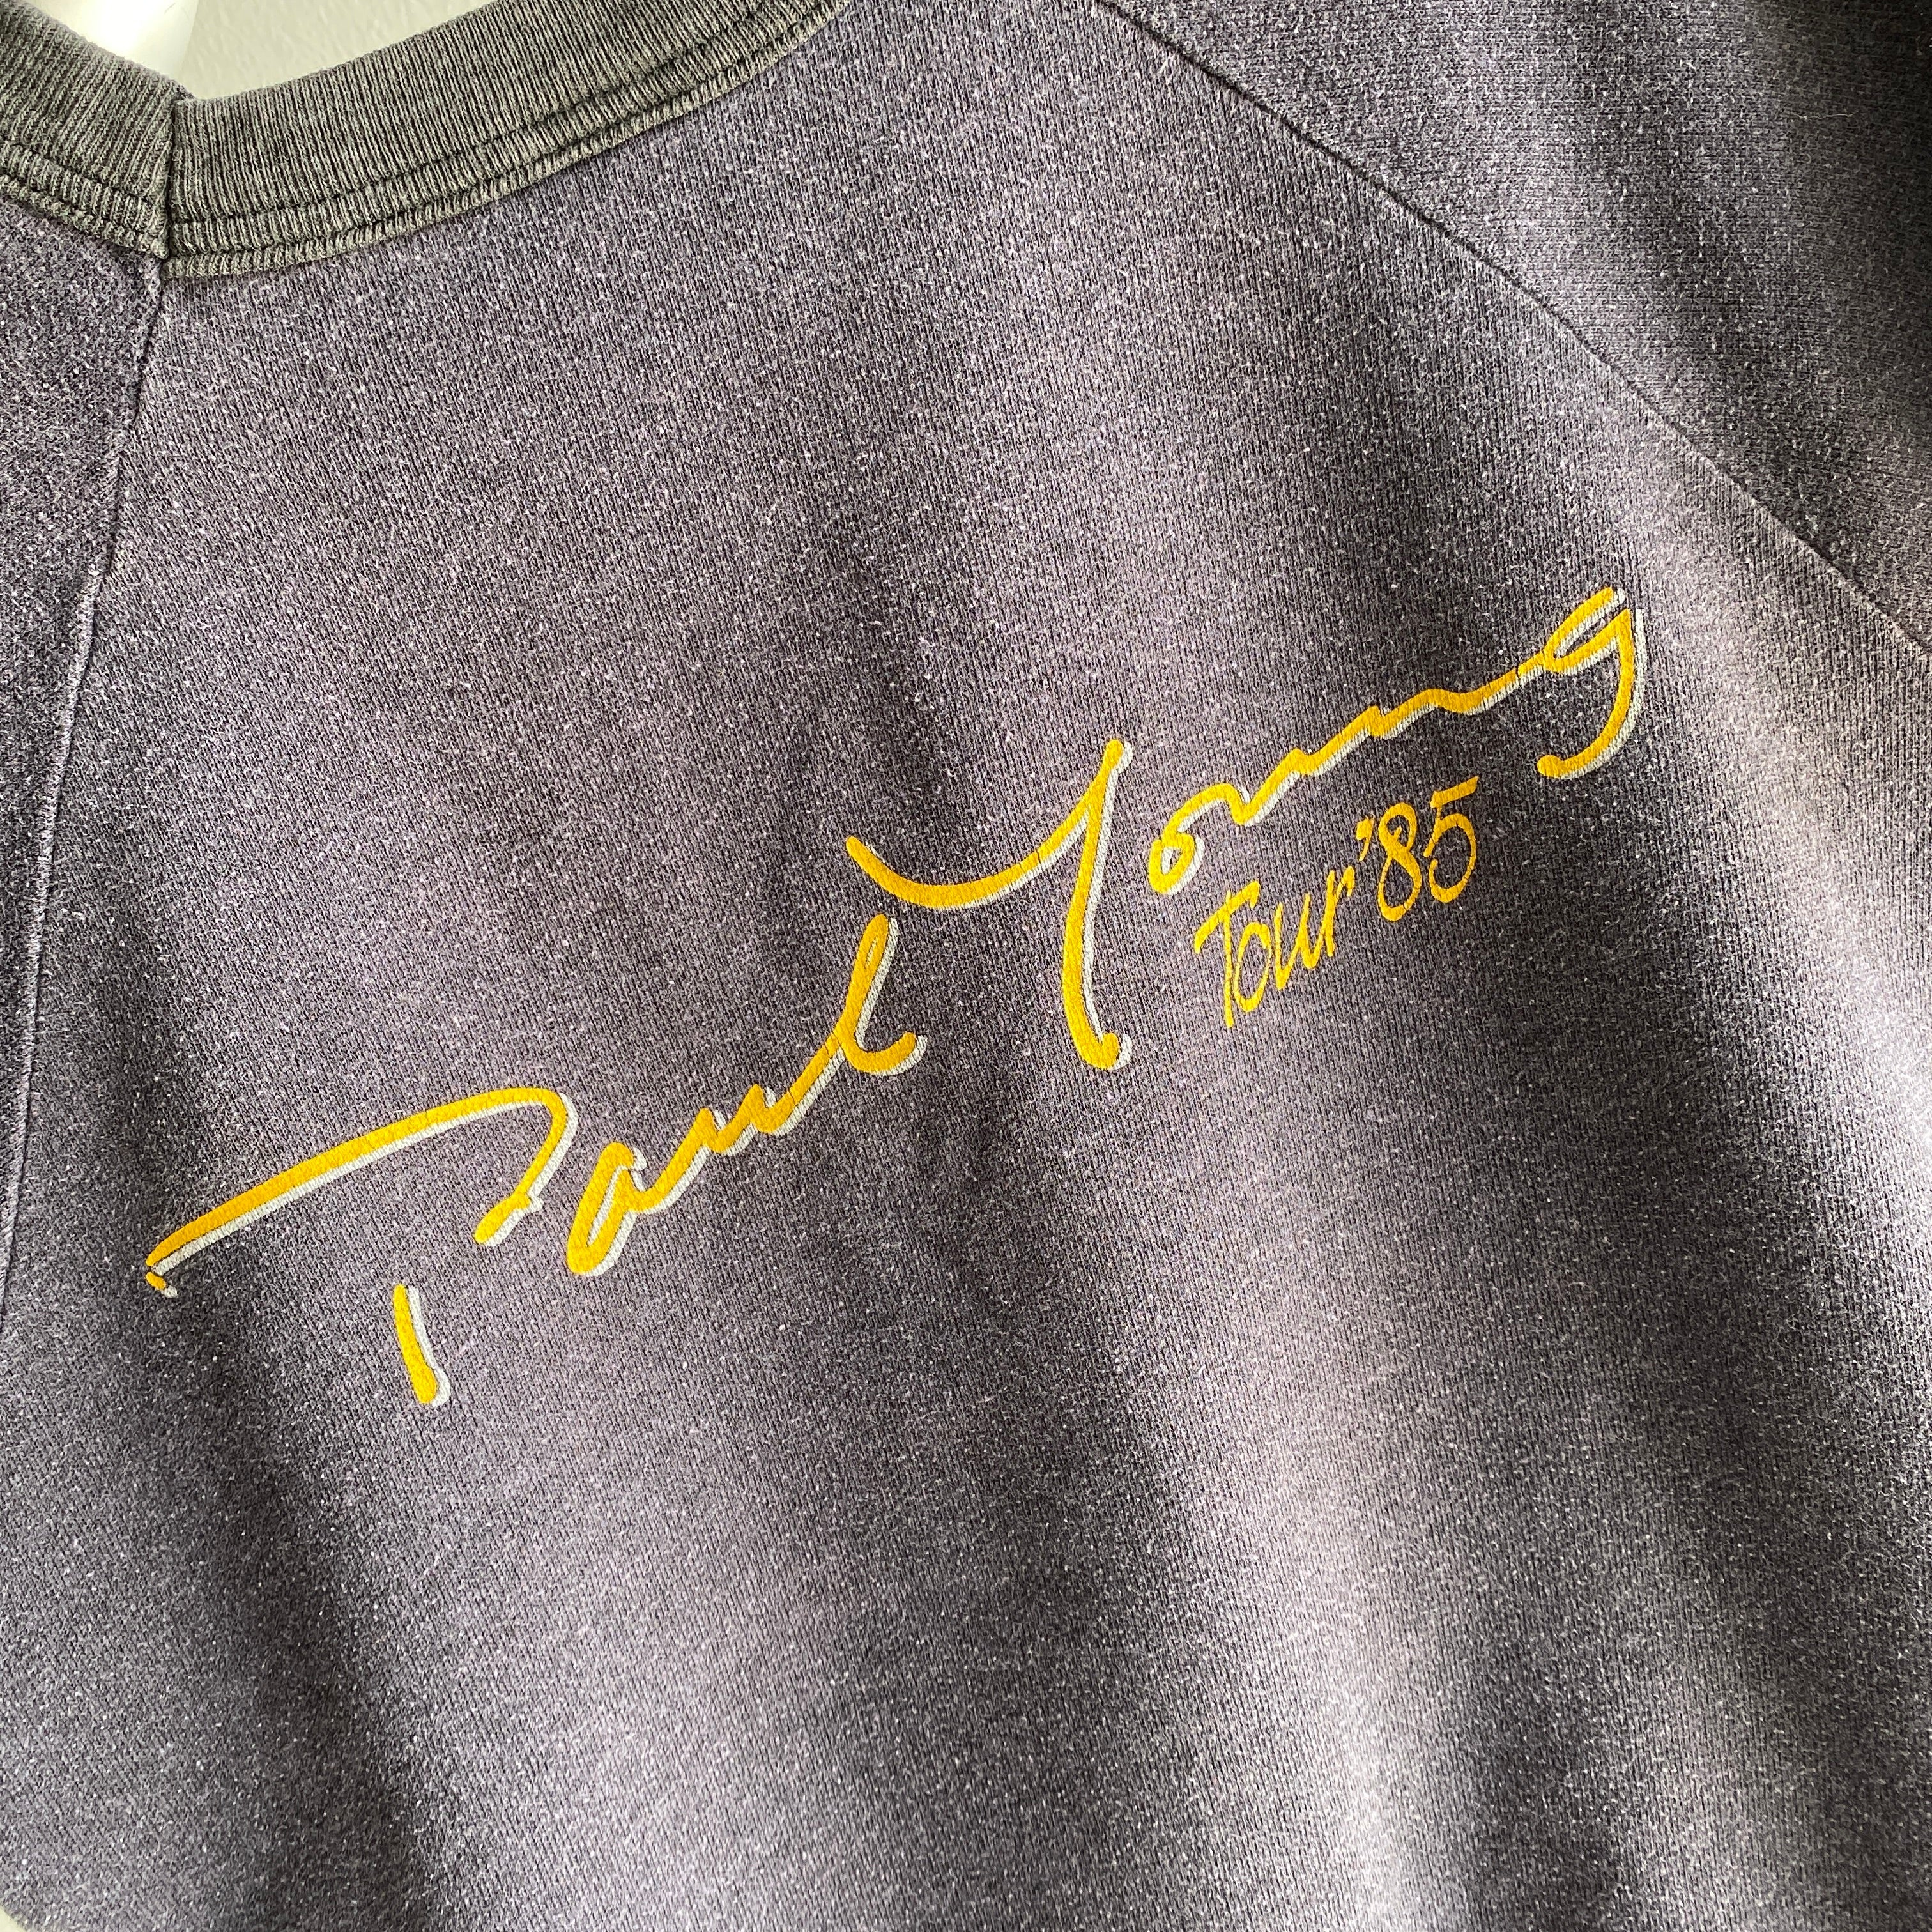 1985 Paul Young Tour Short Sleeve Warm Up Sweatshirt - RADDDDDD